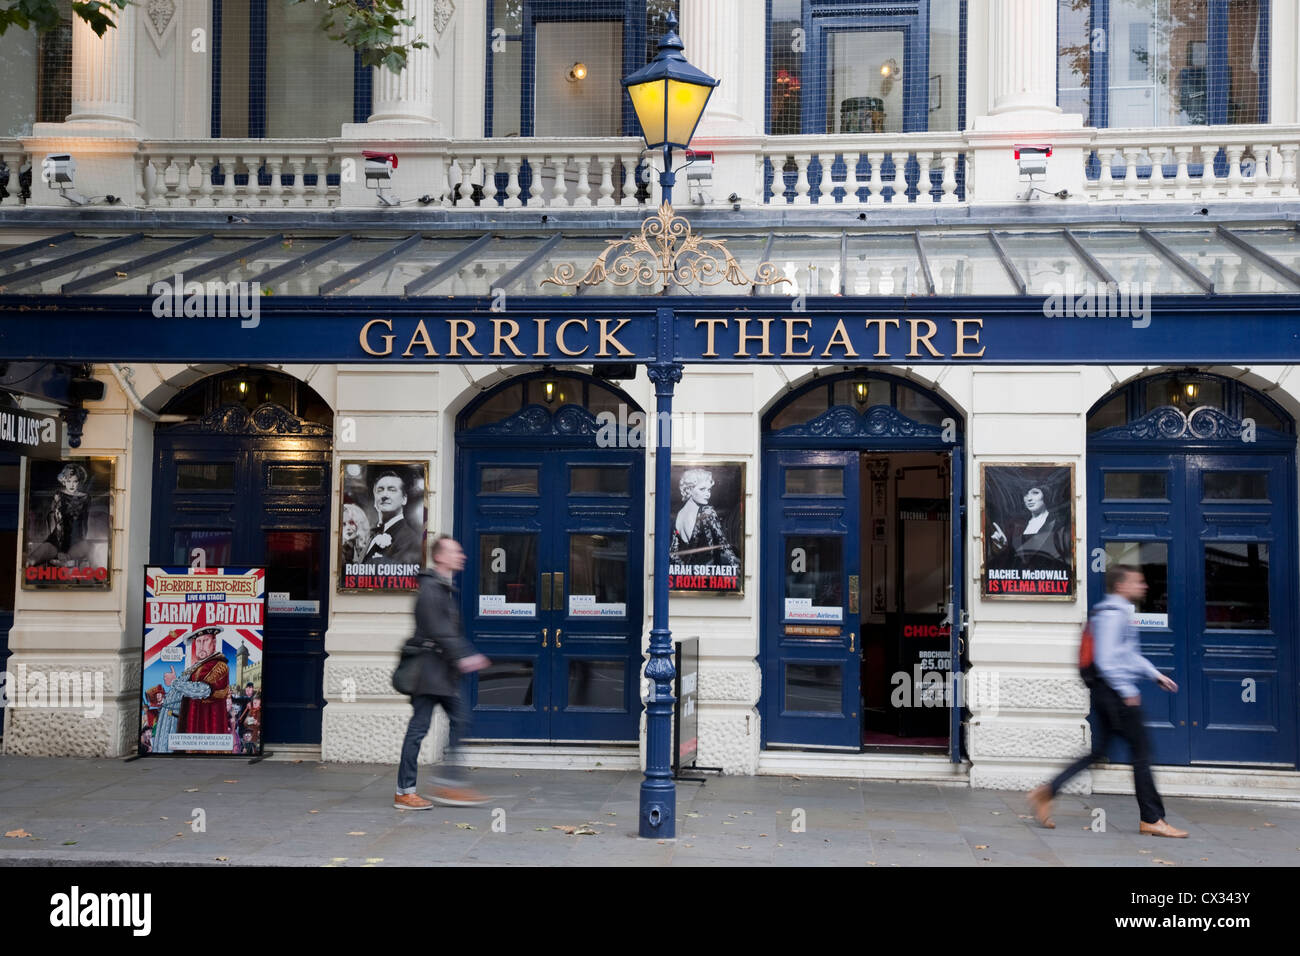 Facade of the Garrick Theatre, London, England, UK Stock Photo